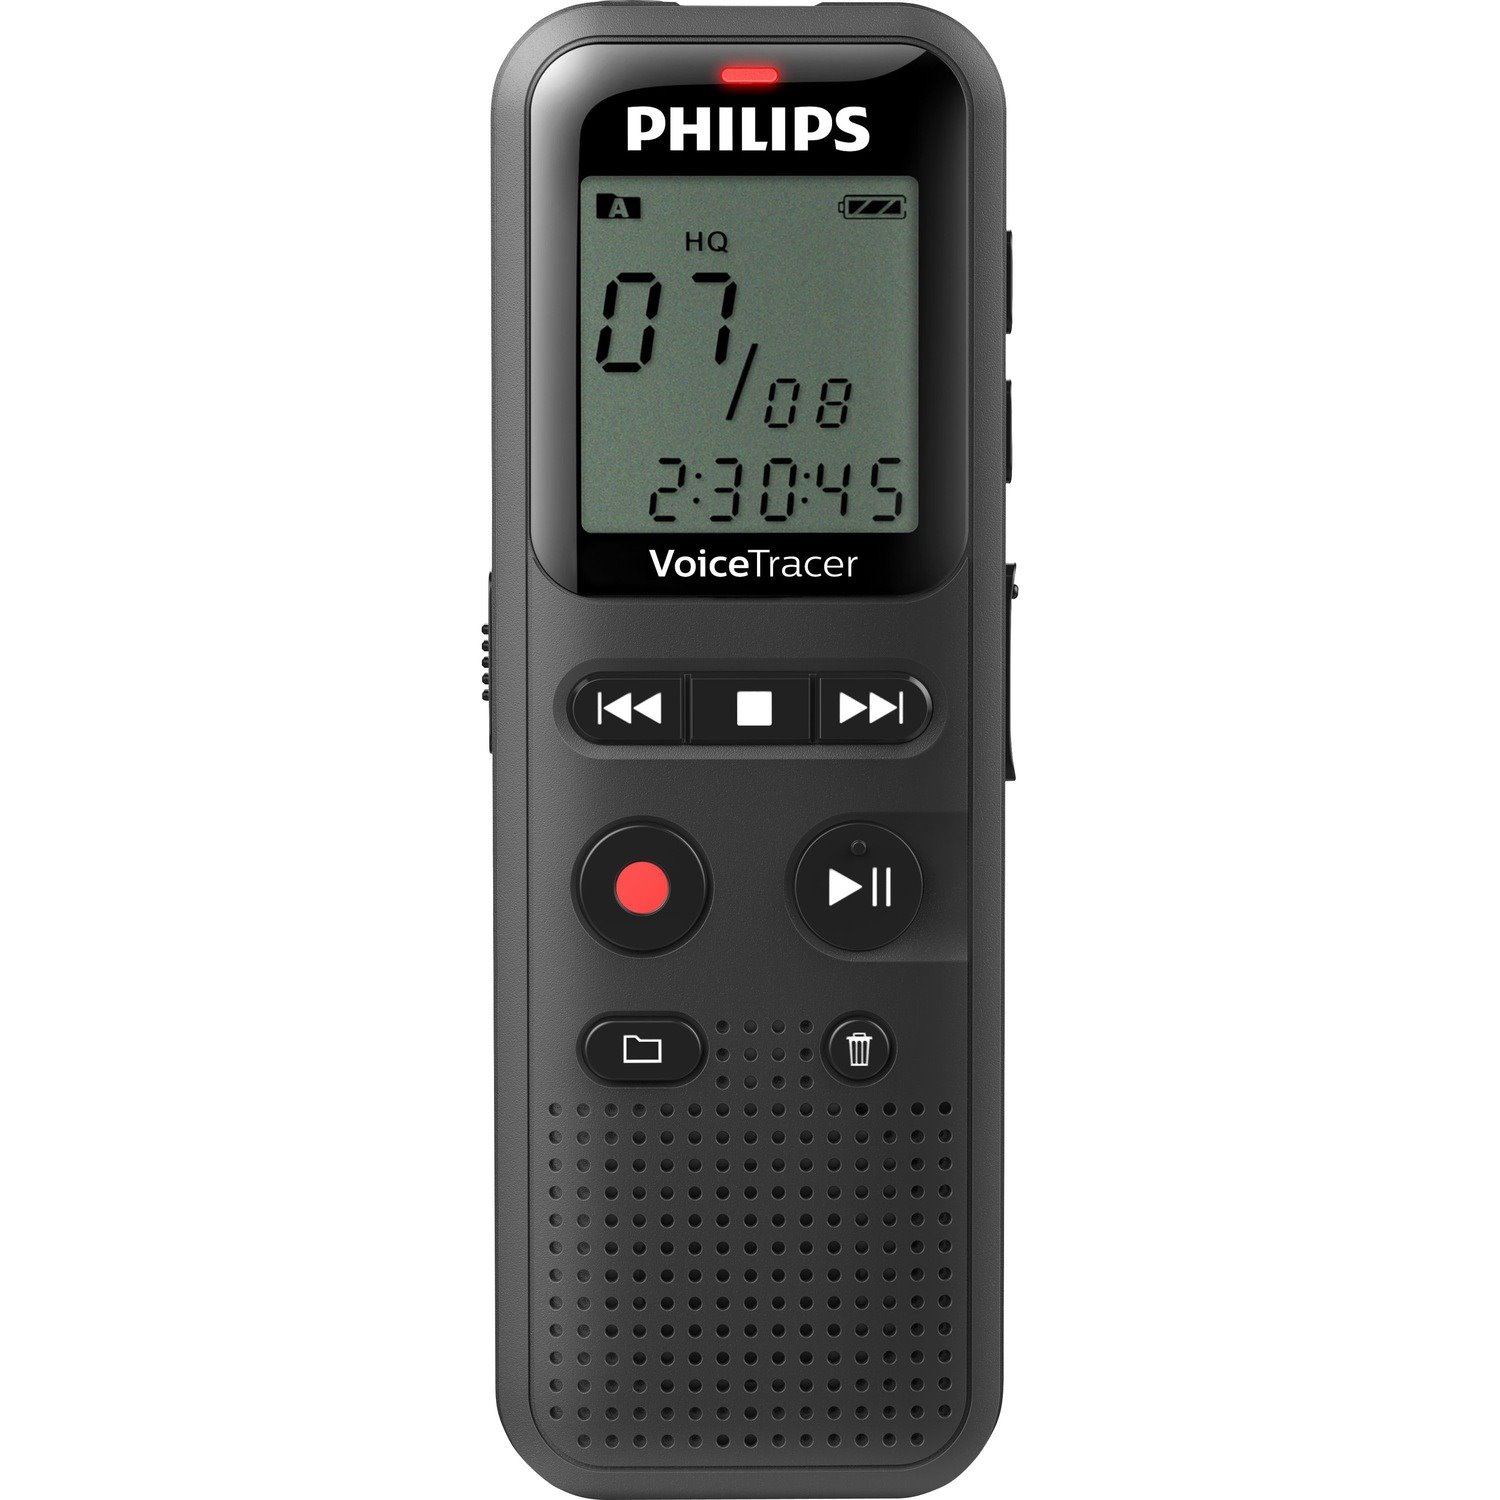 Philips Voice Tracer DVT1160 Digital Voice Recorder - Black